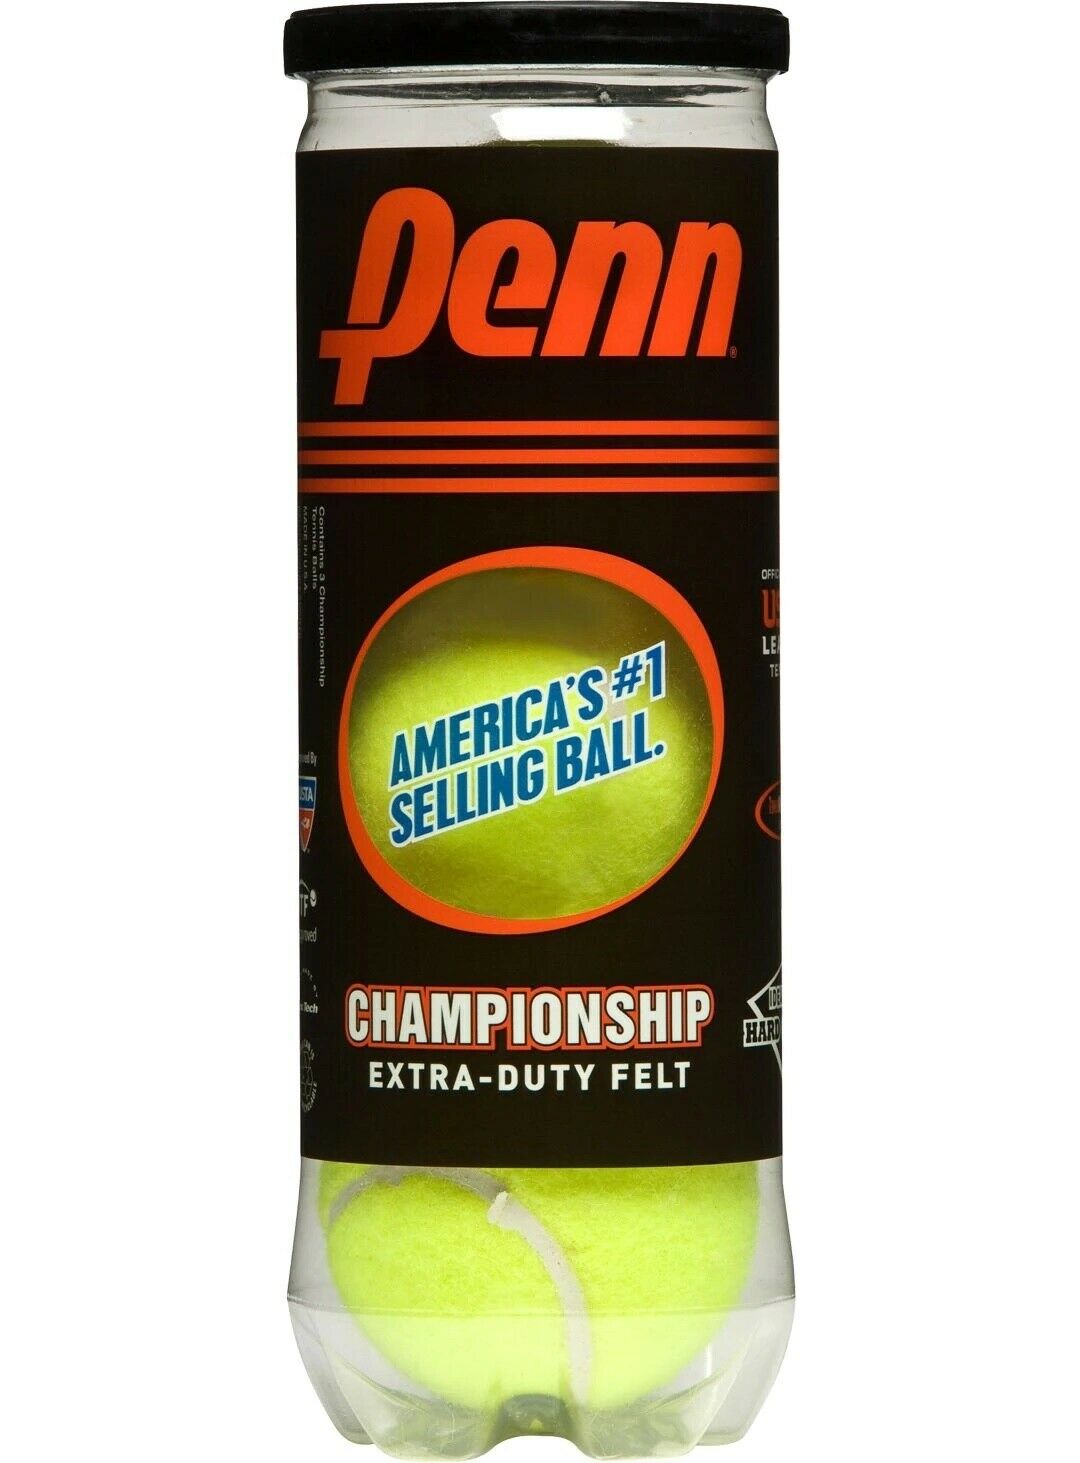 Penn Championship Extra Duty Felt Tennis Ball Brand New Unopened, Single Or Bulk